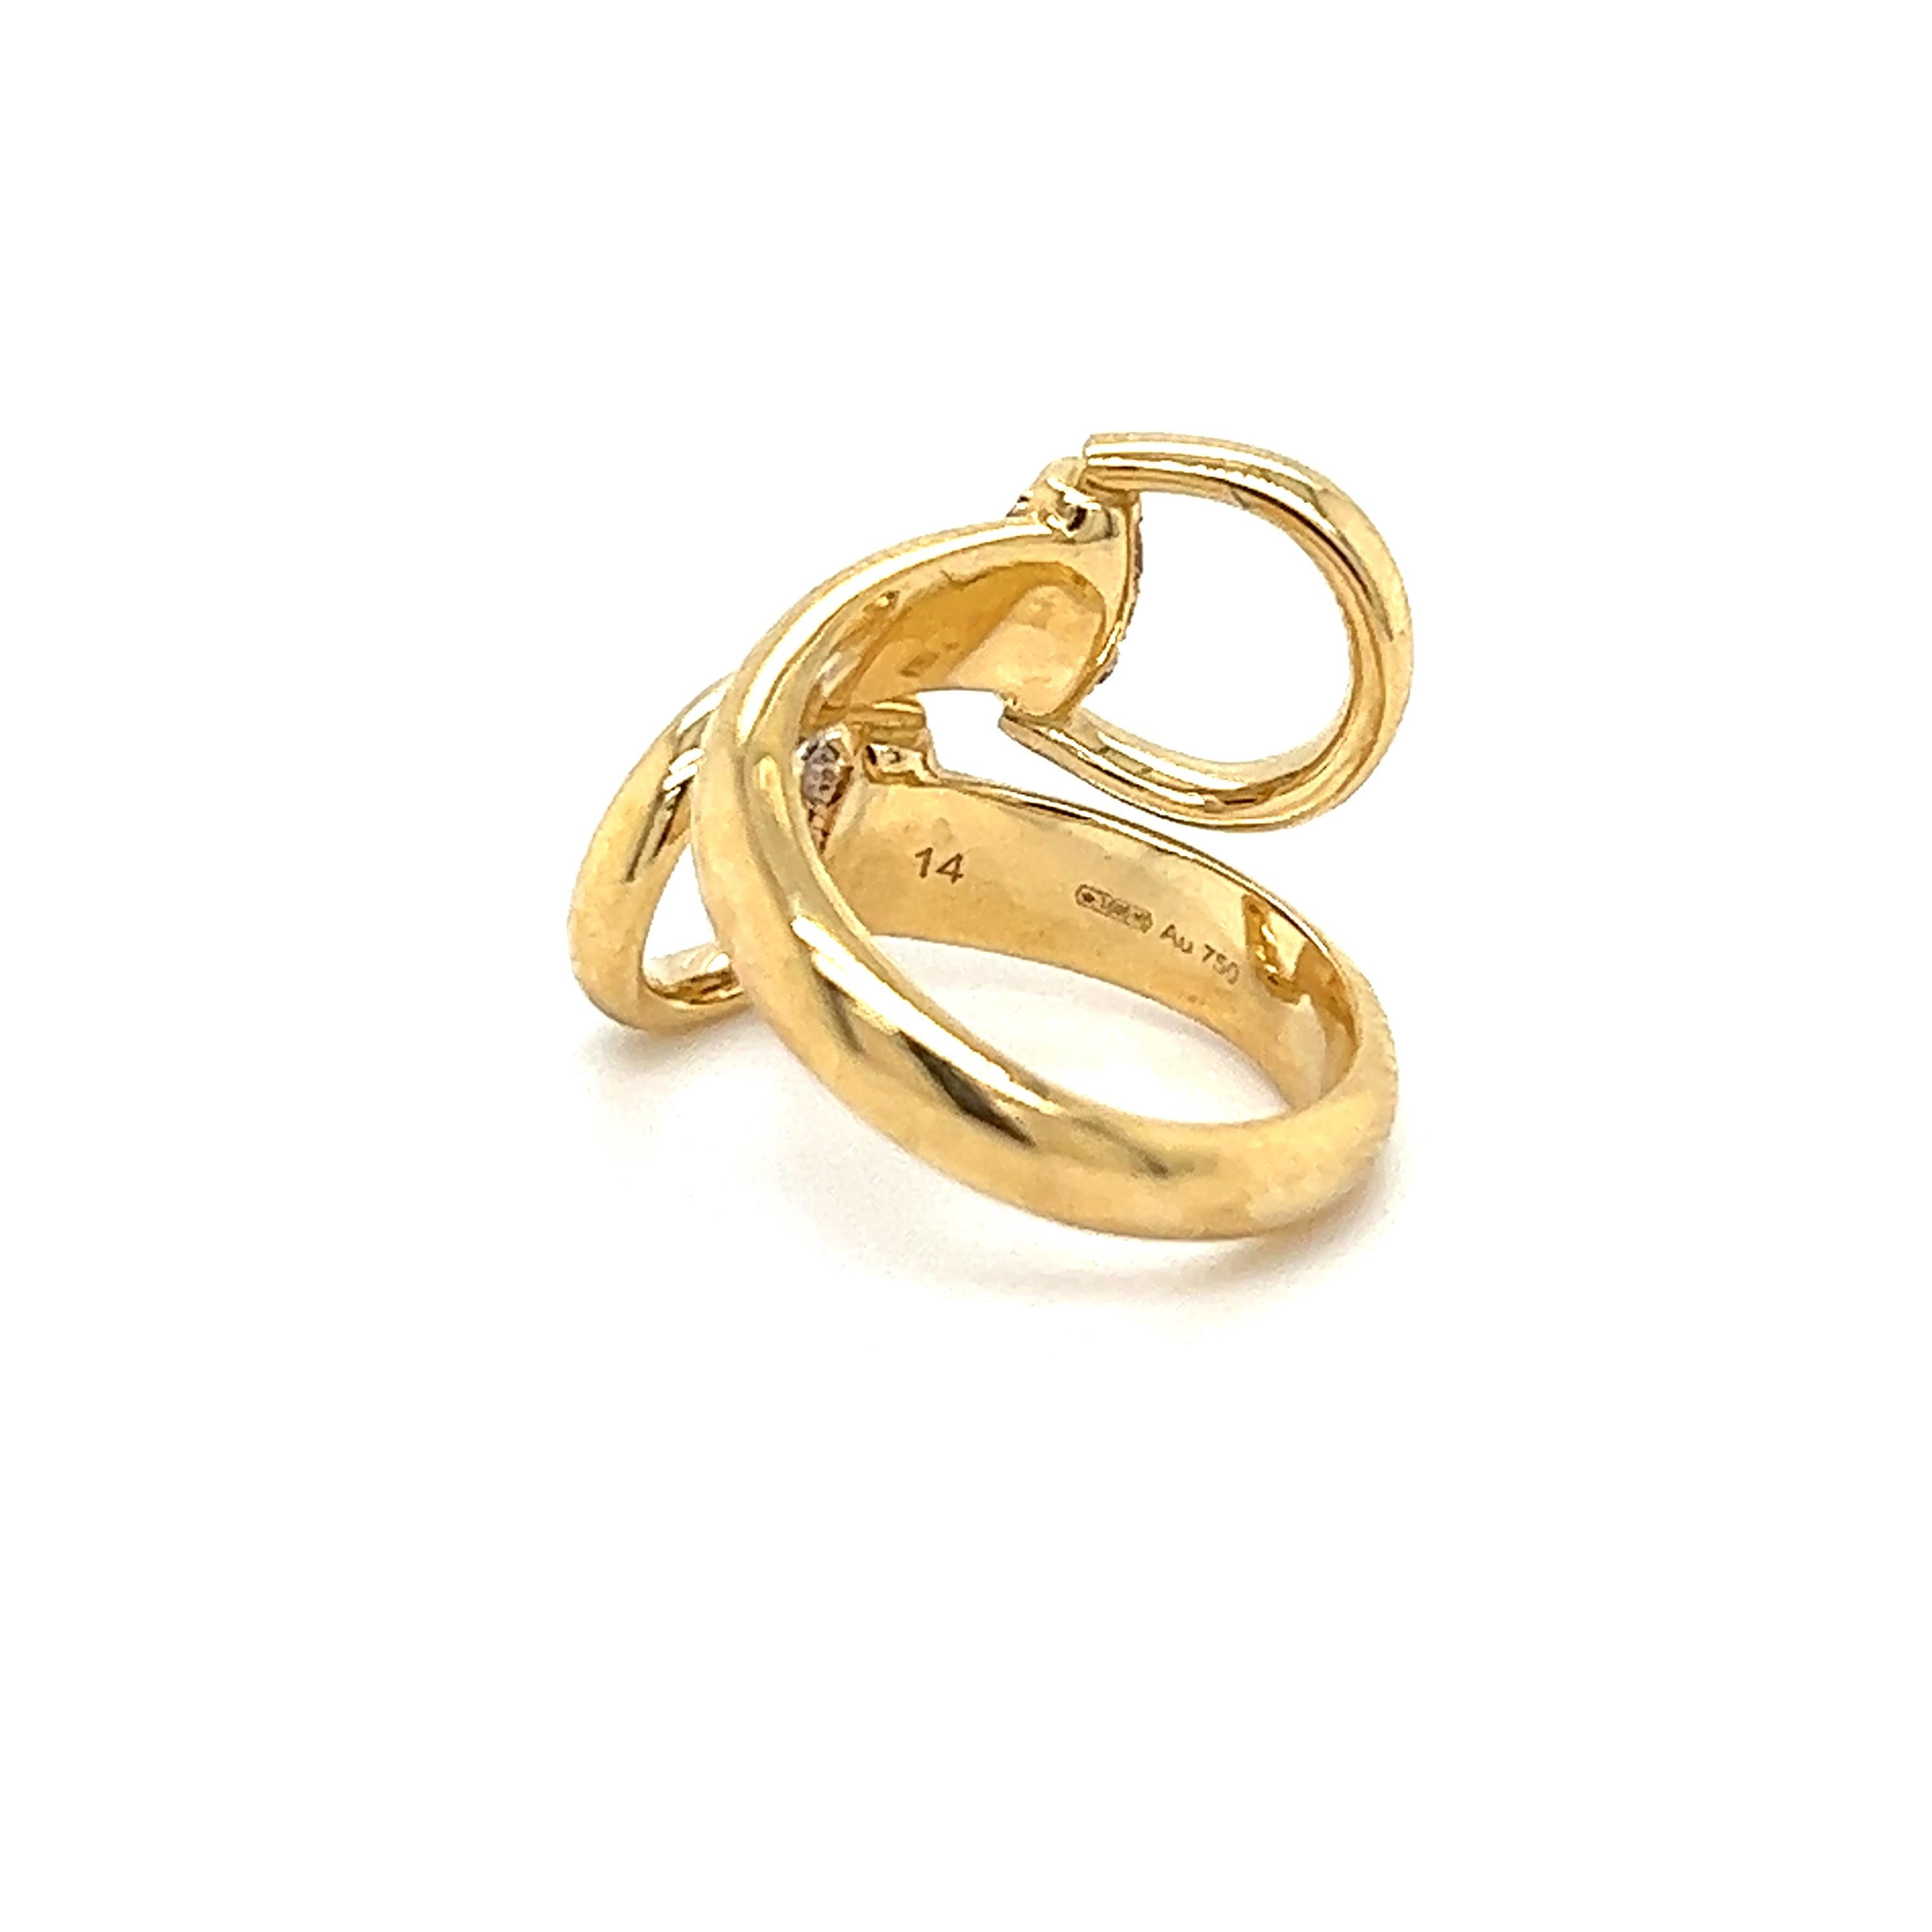 gucci horsebit ring 18k gold